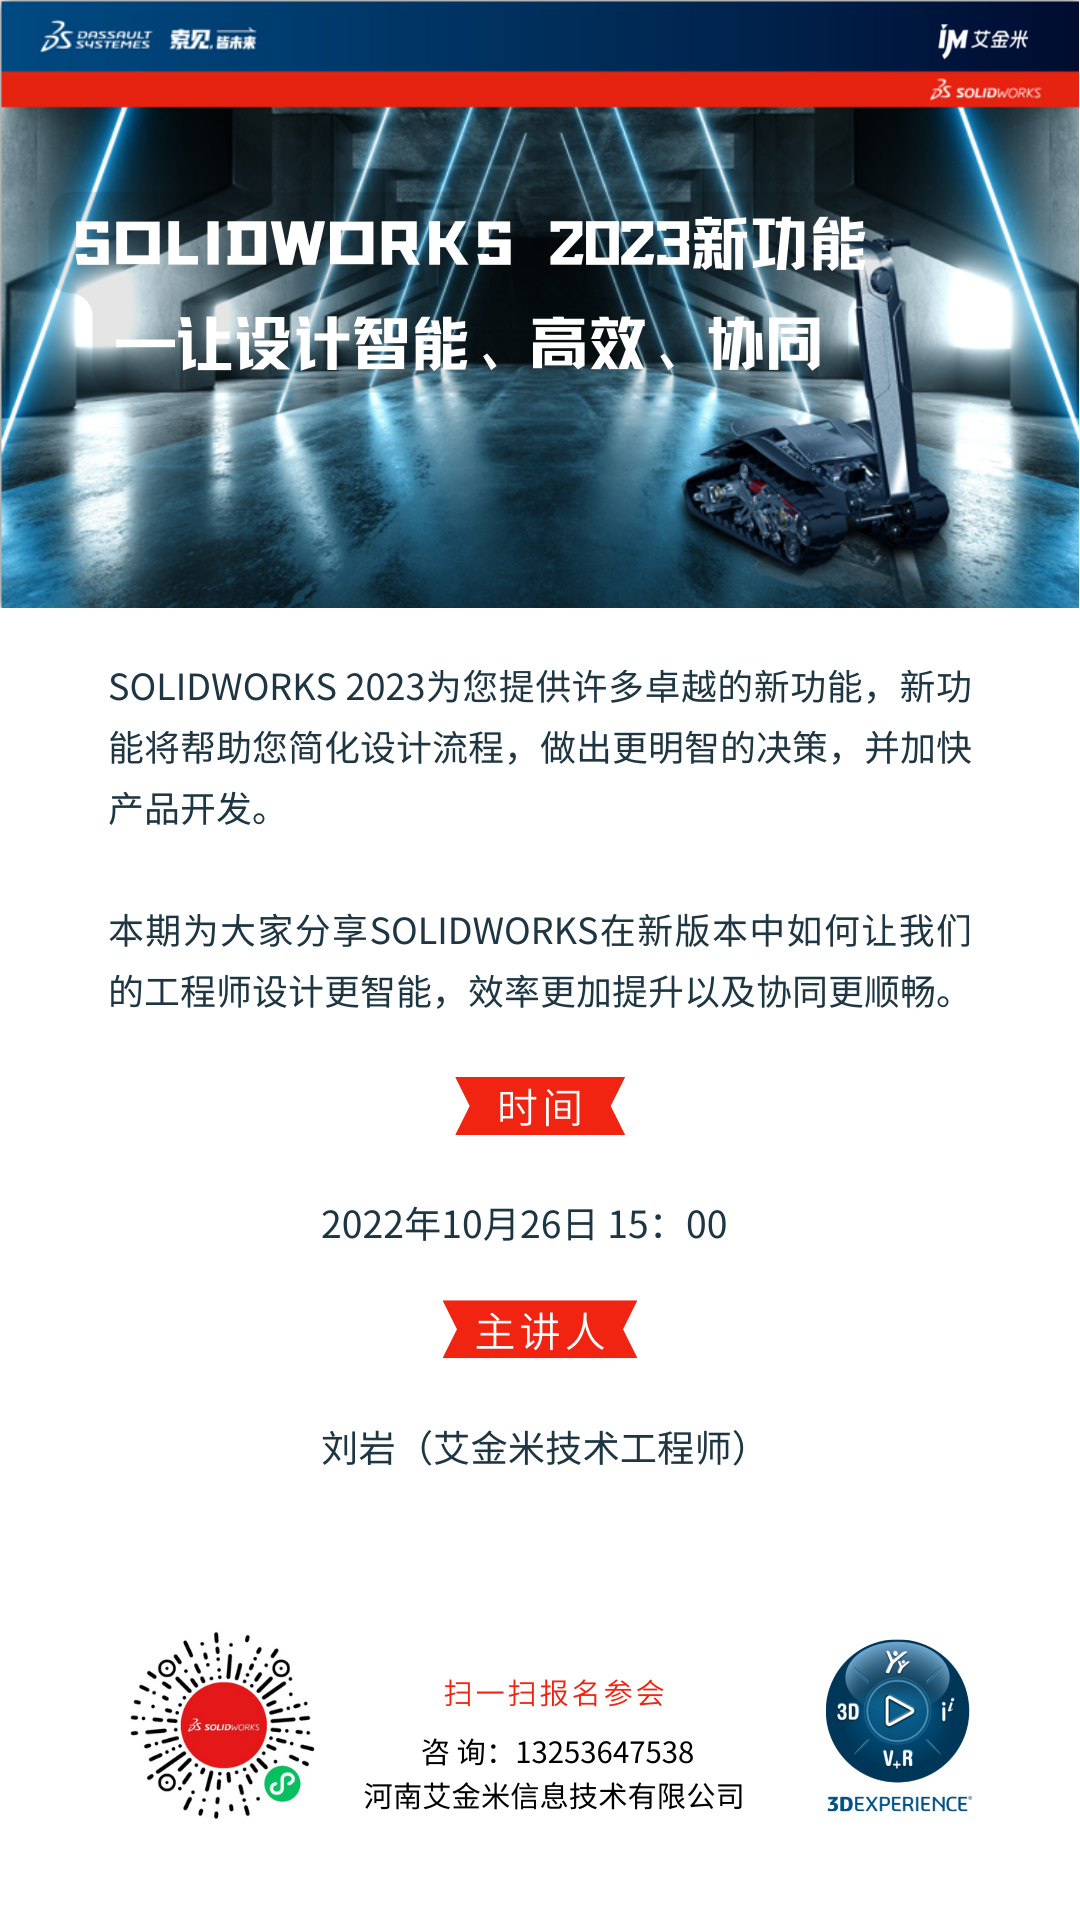 SOLIDWORKS 2023新增功能，让设计智能、高效、协同-艾金米线上课堂